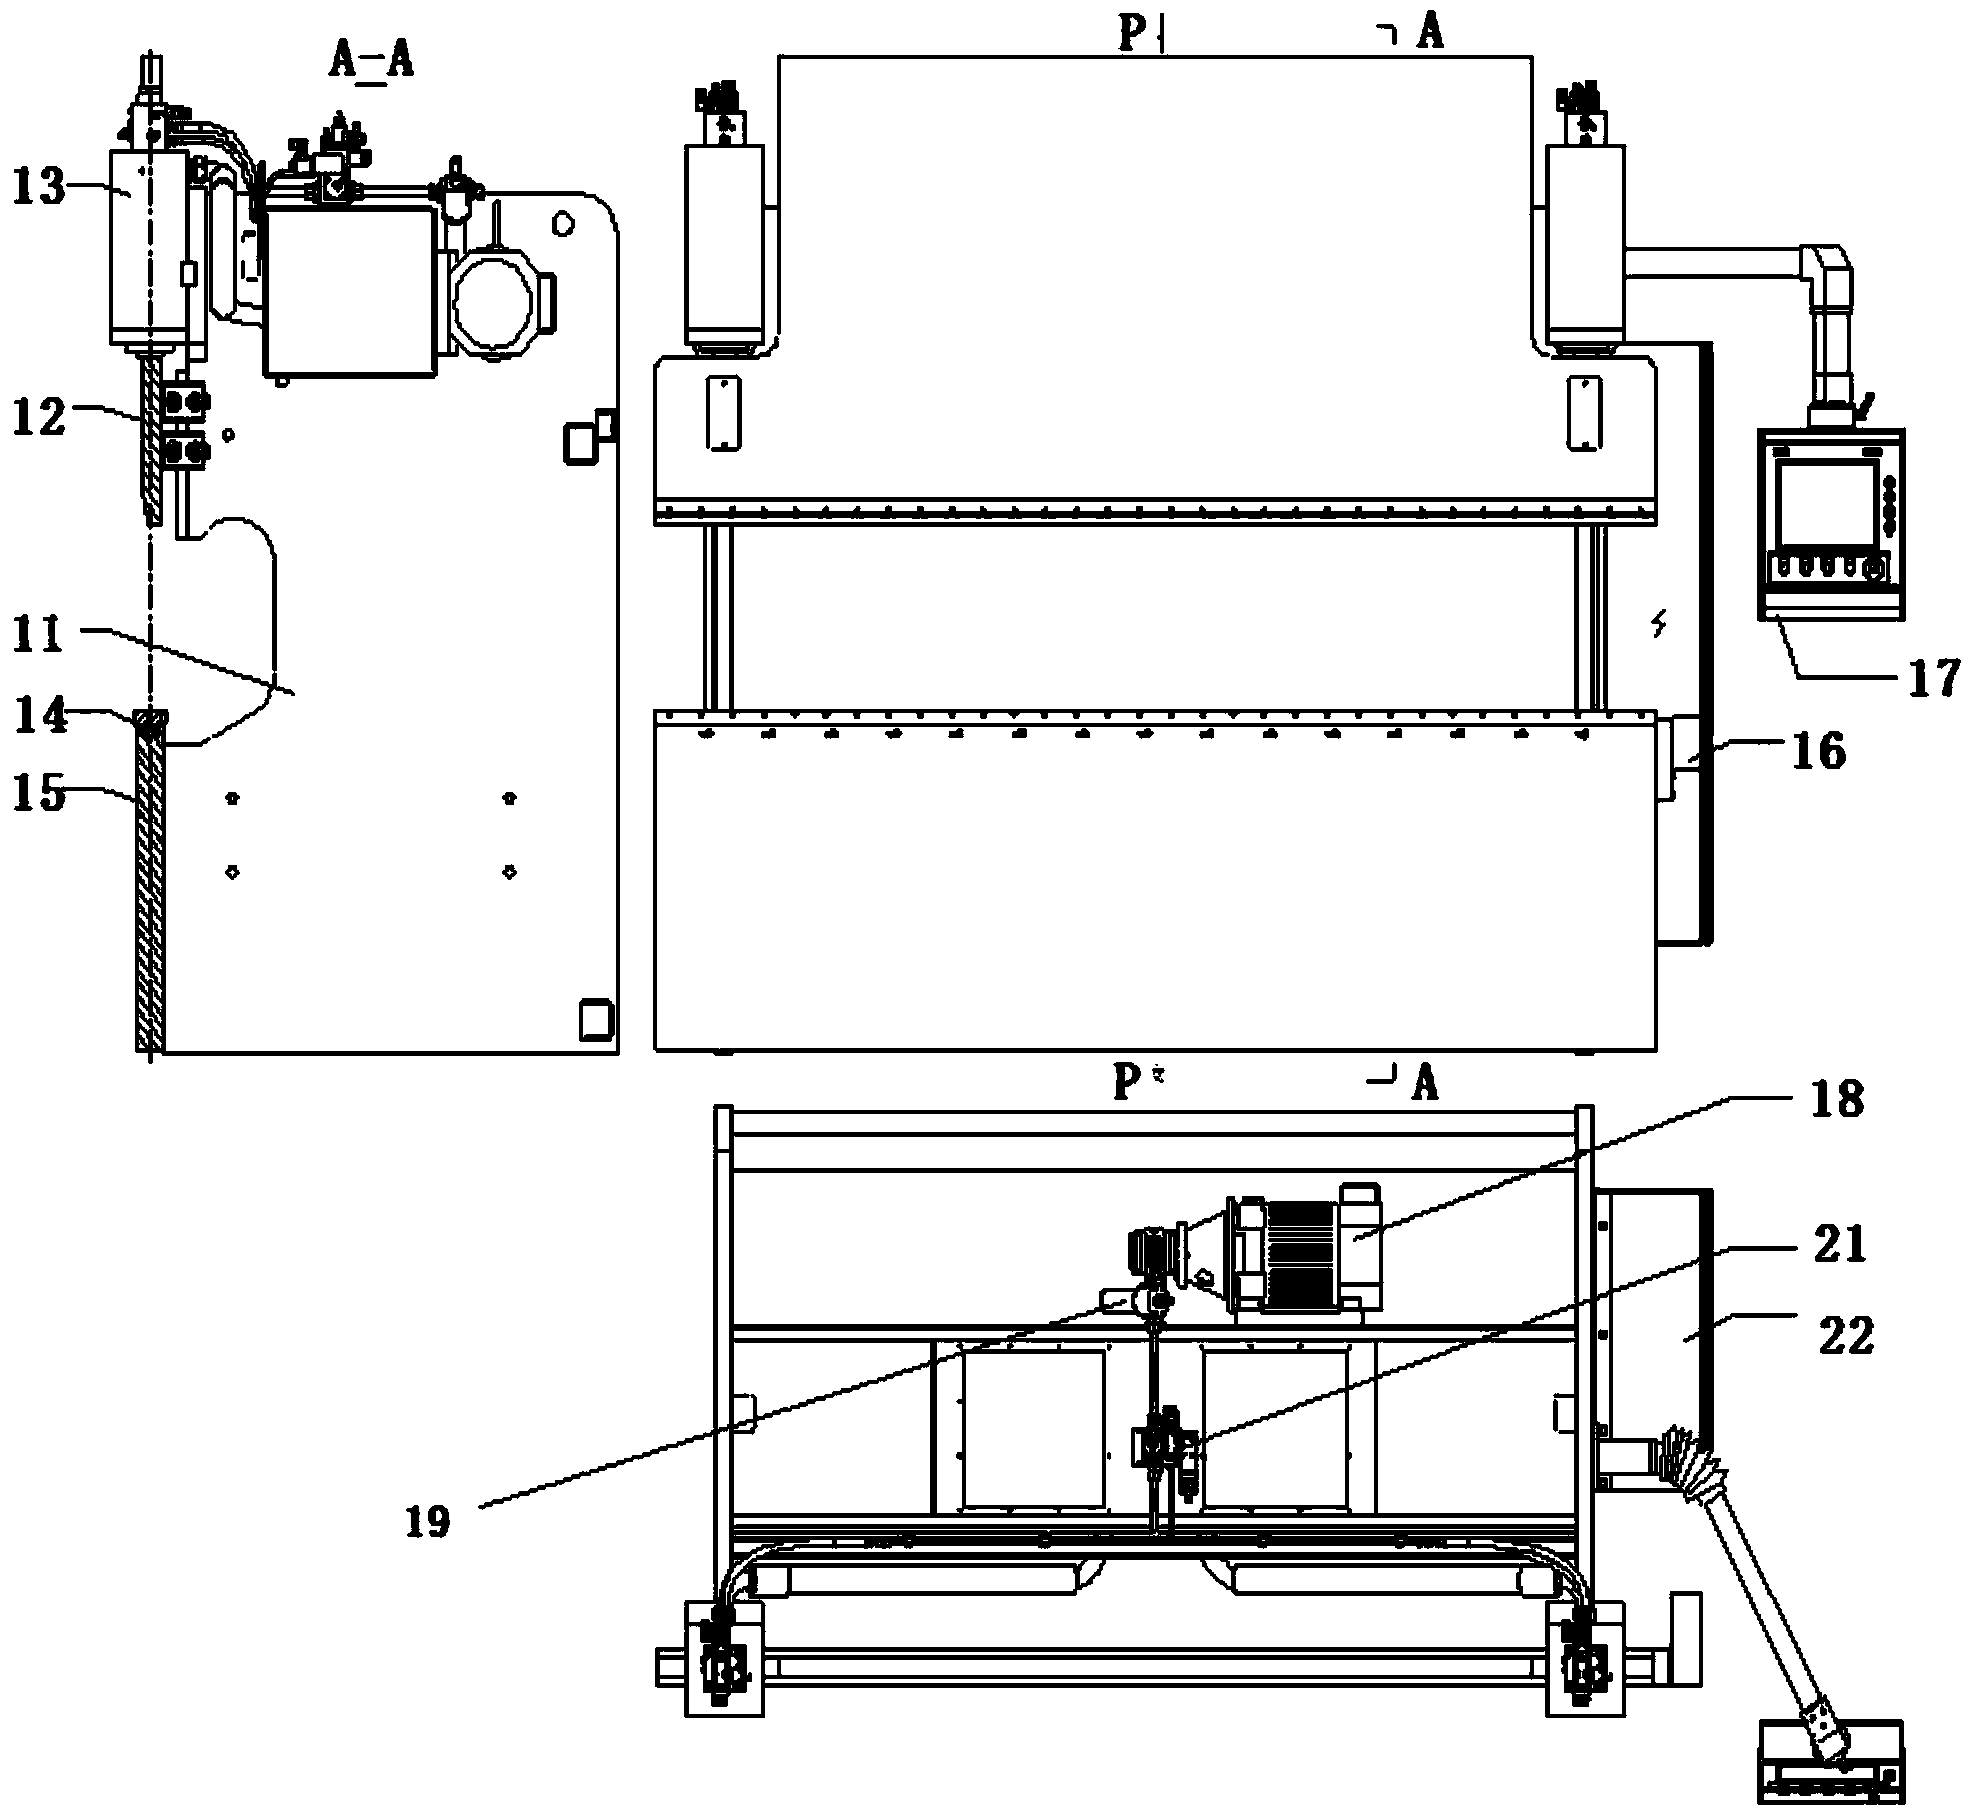 Full-closed loop electro-hydraulic servo plate bending machine